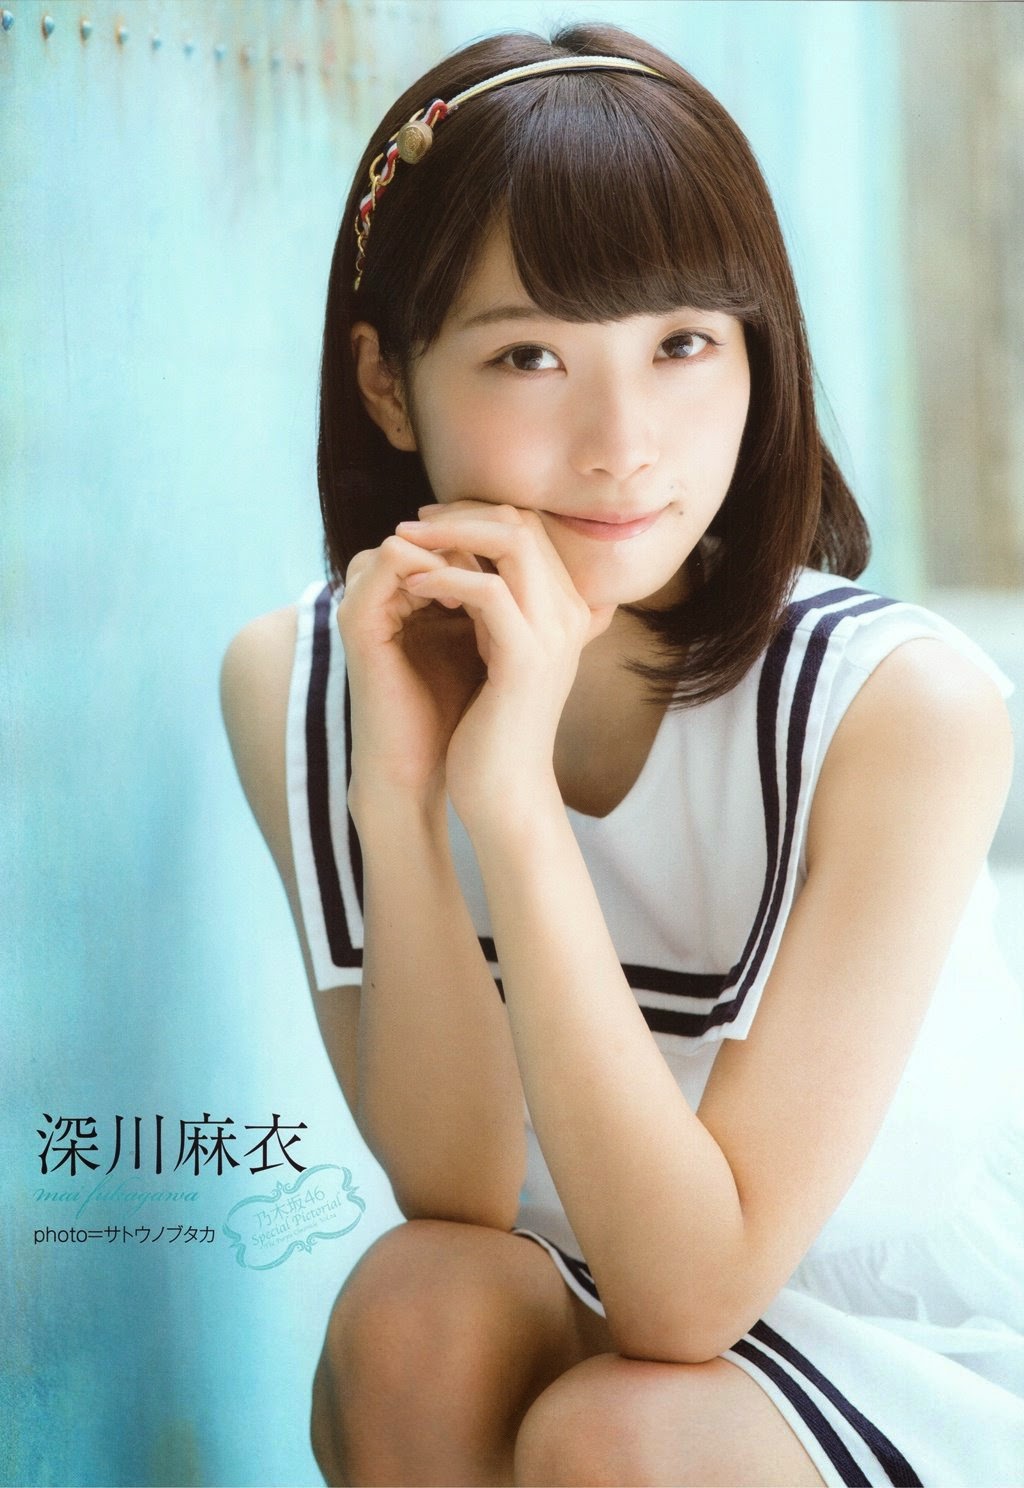 Nao Kanzaki And A Few Friends Nogizaka46 15 Magazine Scans 13